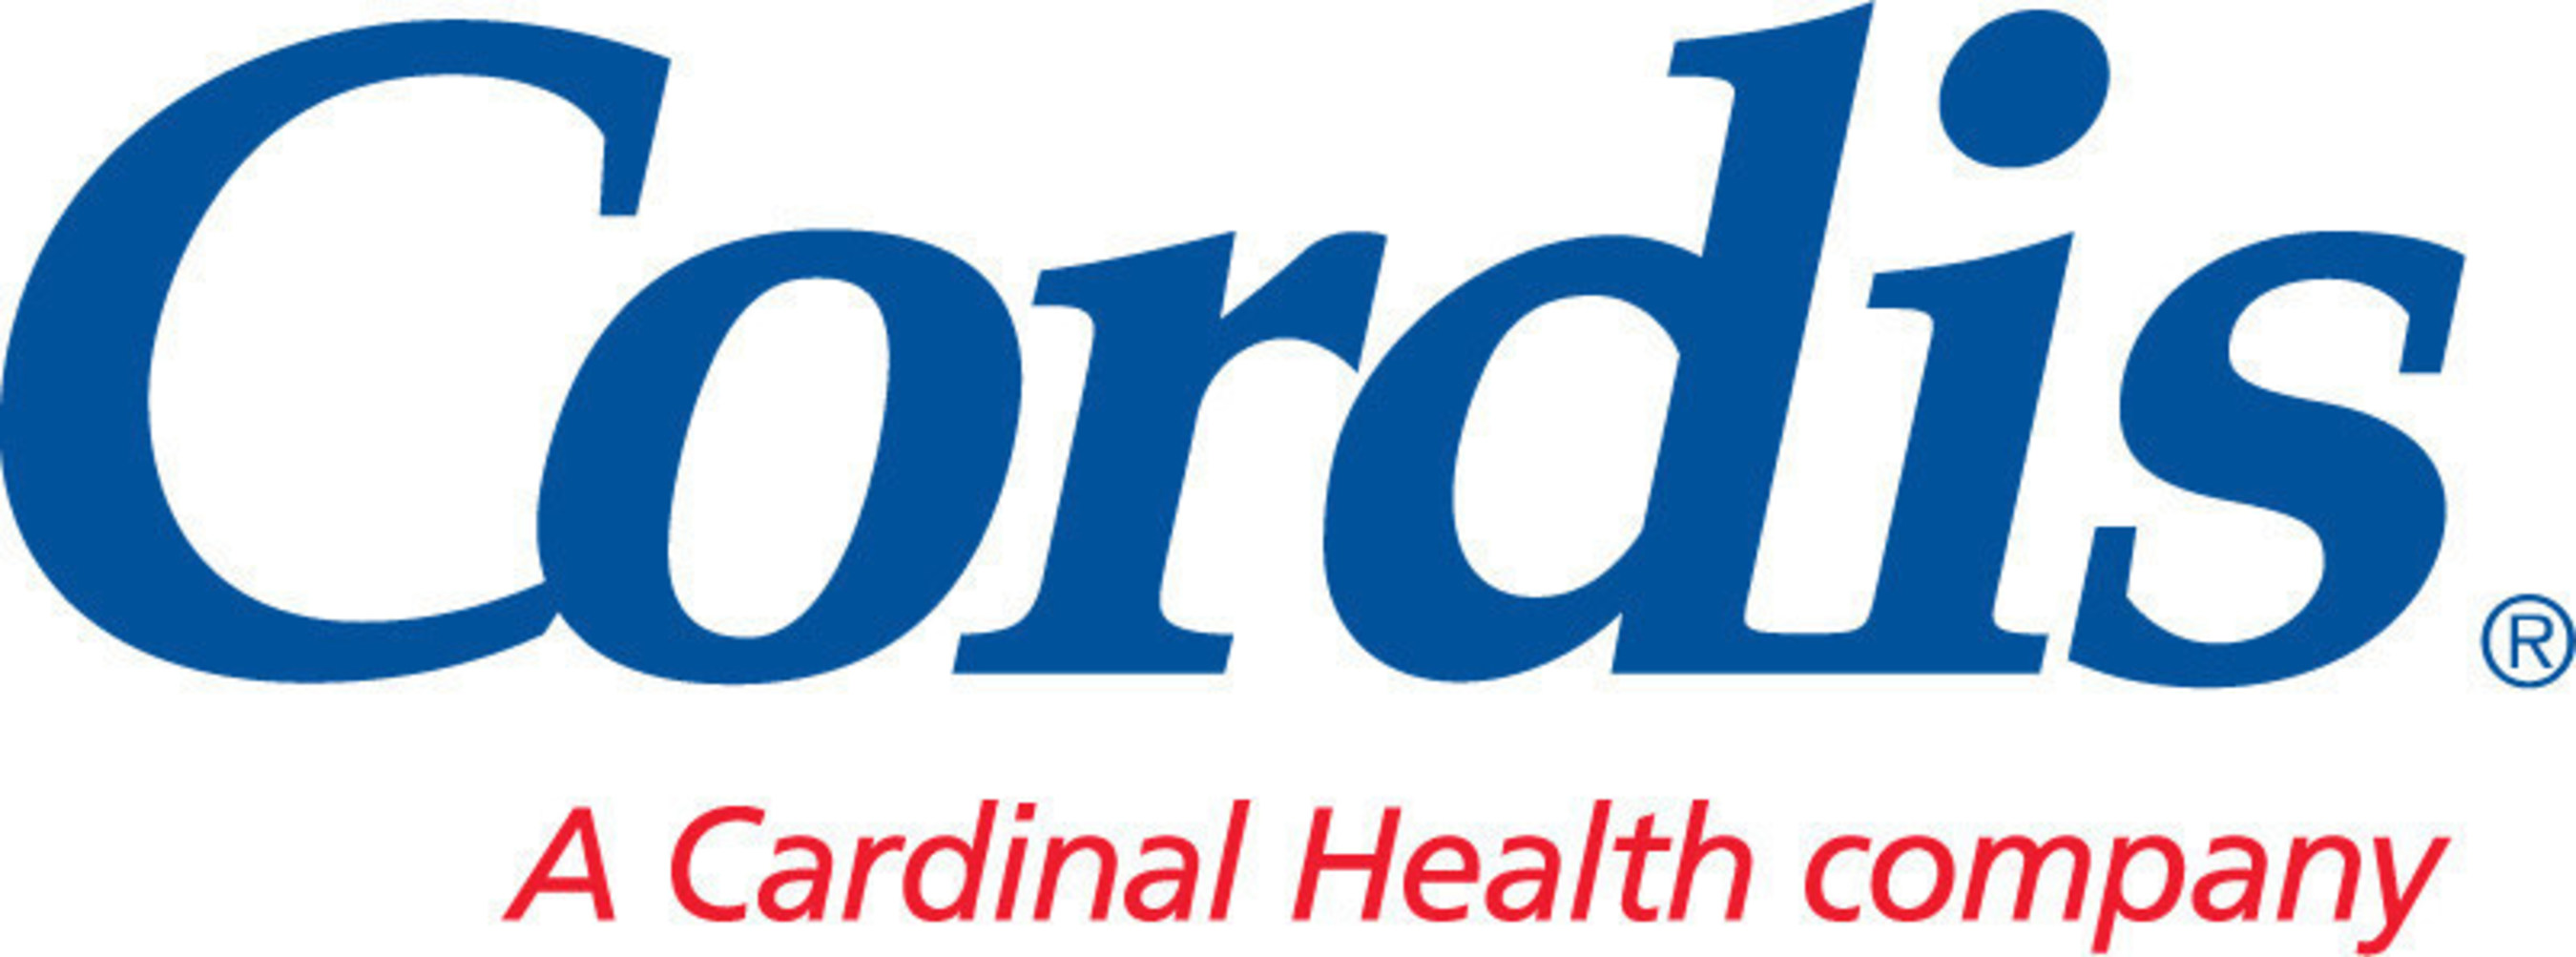 Cordis, a Cardinal Health company